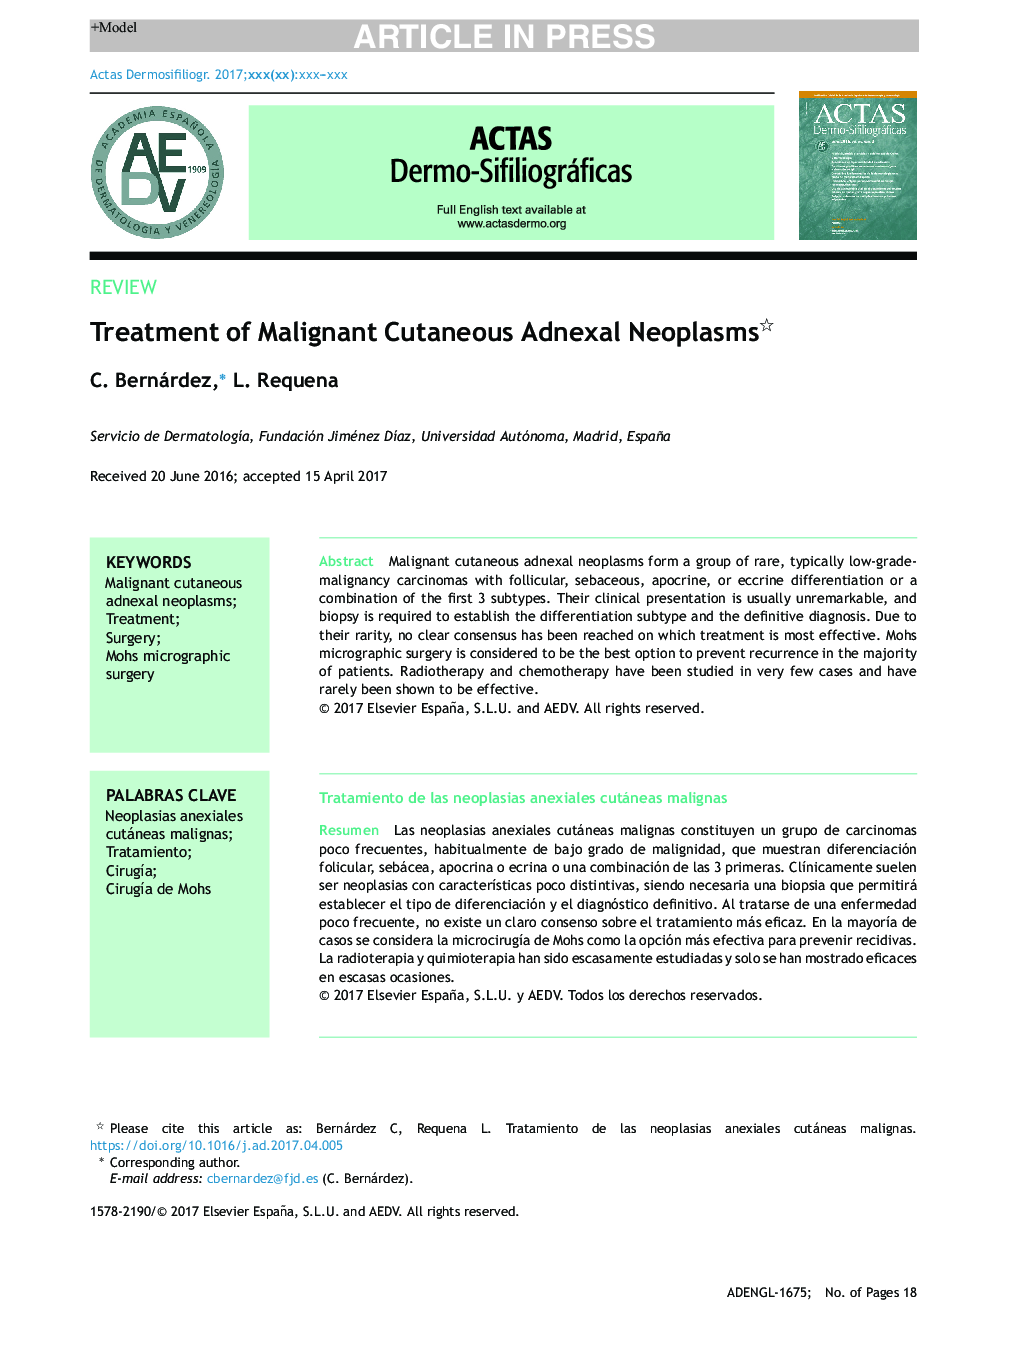 Treatment of Malignant Cutaneous Adnexal Neoplasms